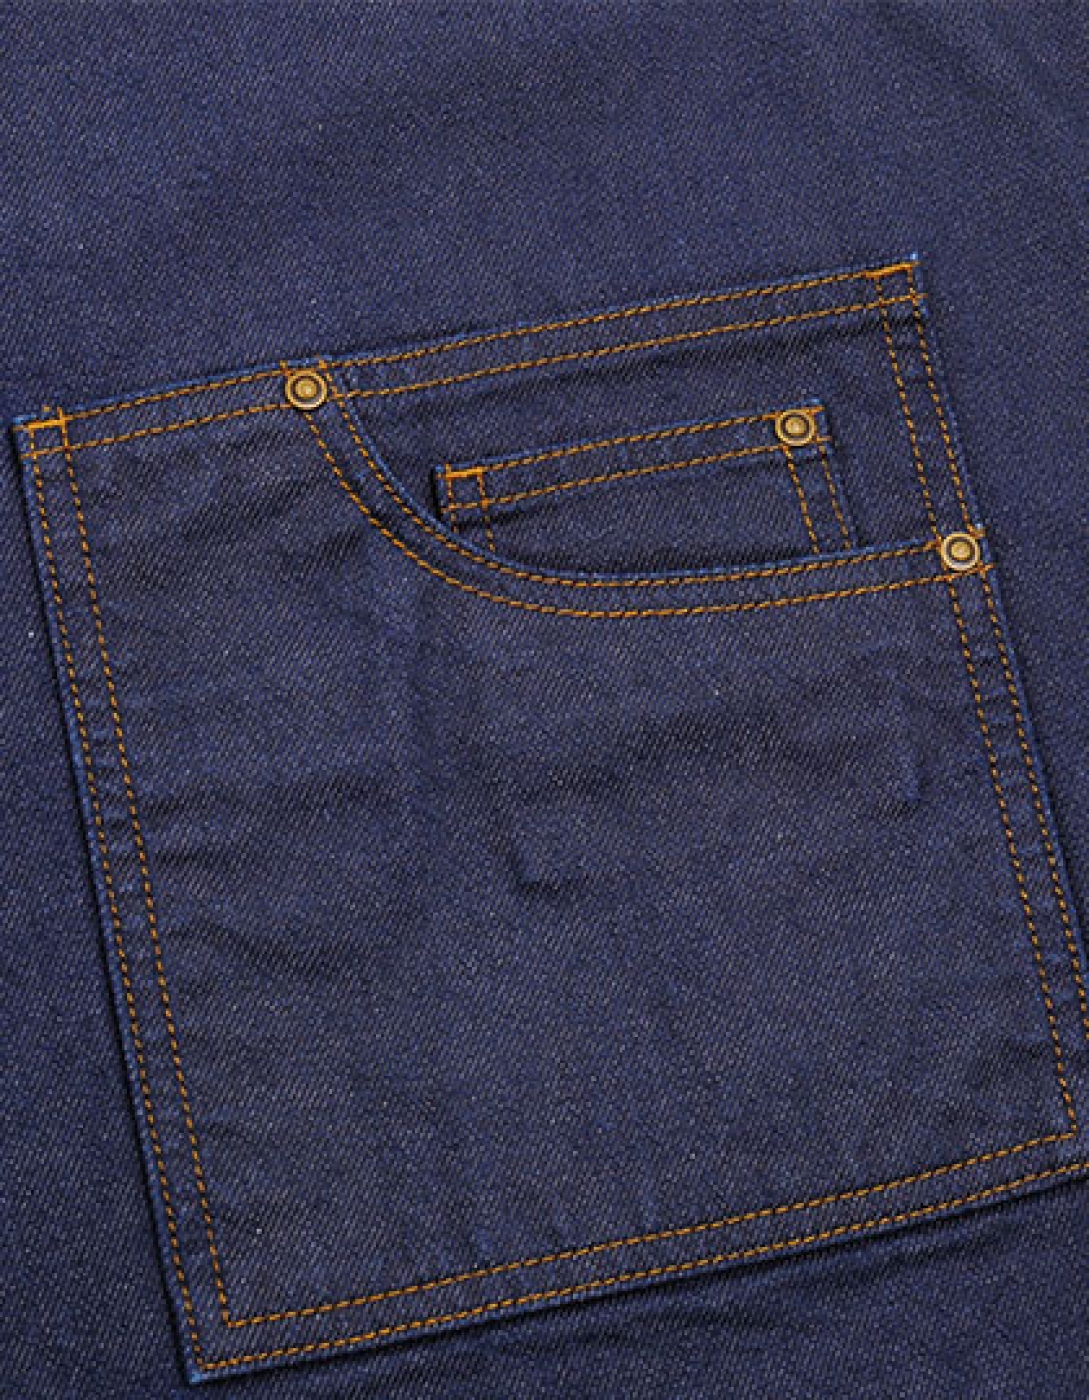 SorturiPersonalizate.ro - Sort ospatar, model cu pieptar din jeans impermeabil si cordoane contrast